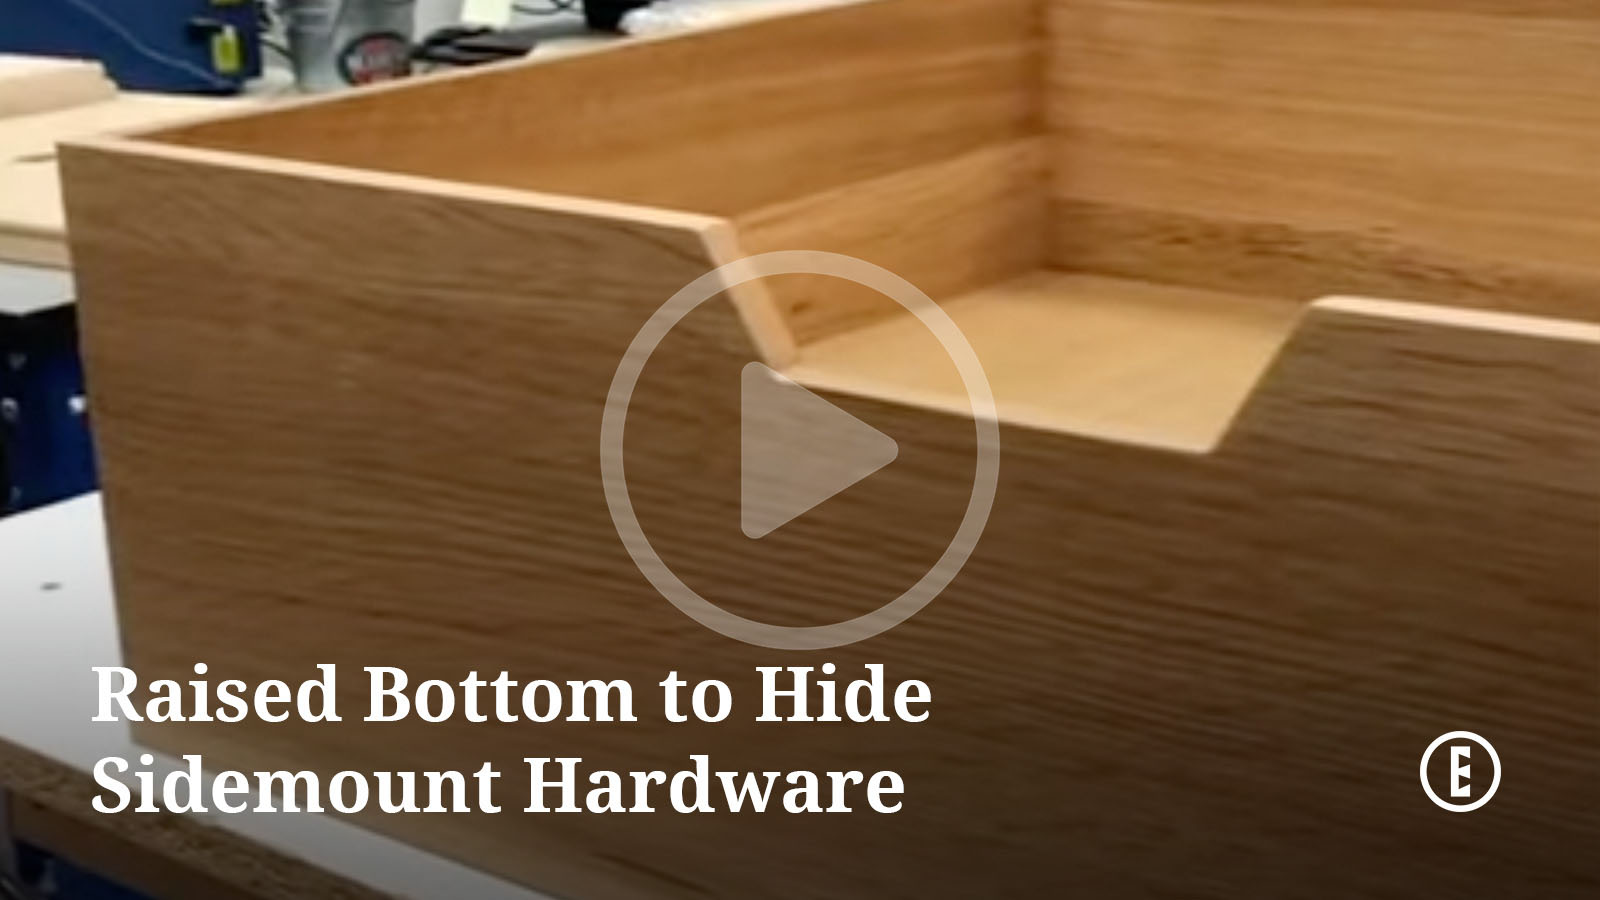 Video: Raised Bottom to Hide Sidemount Hardware